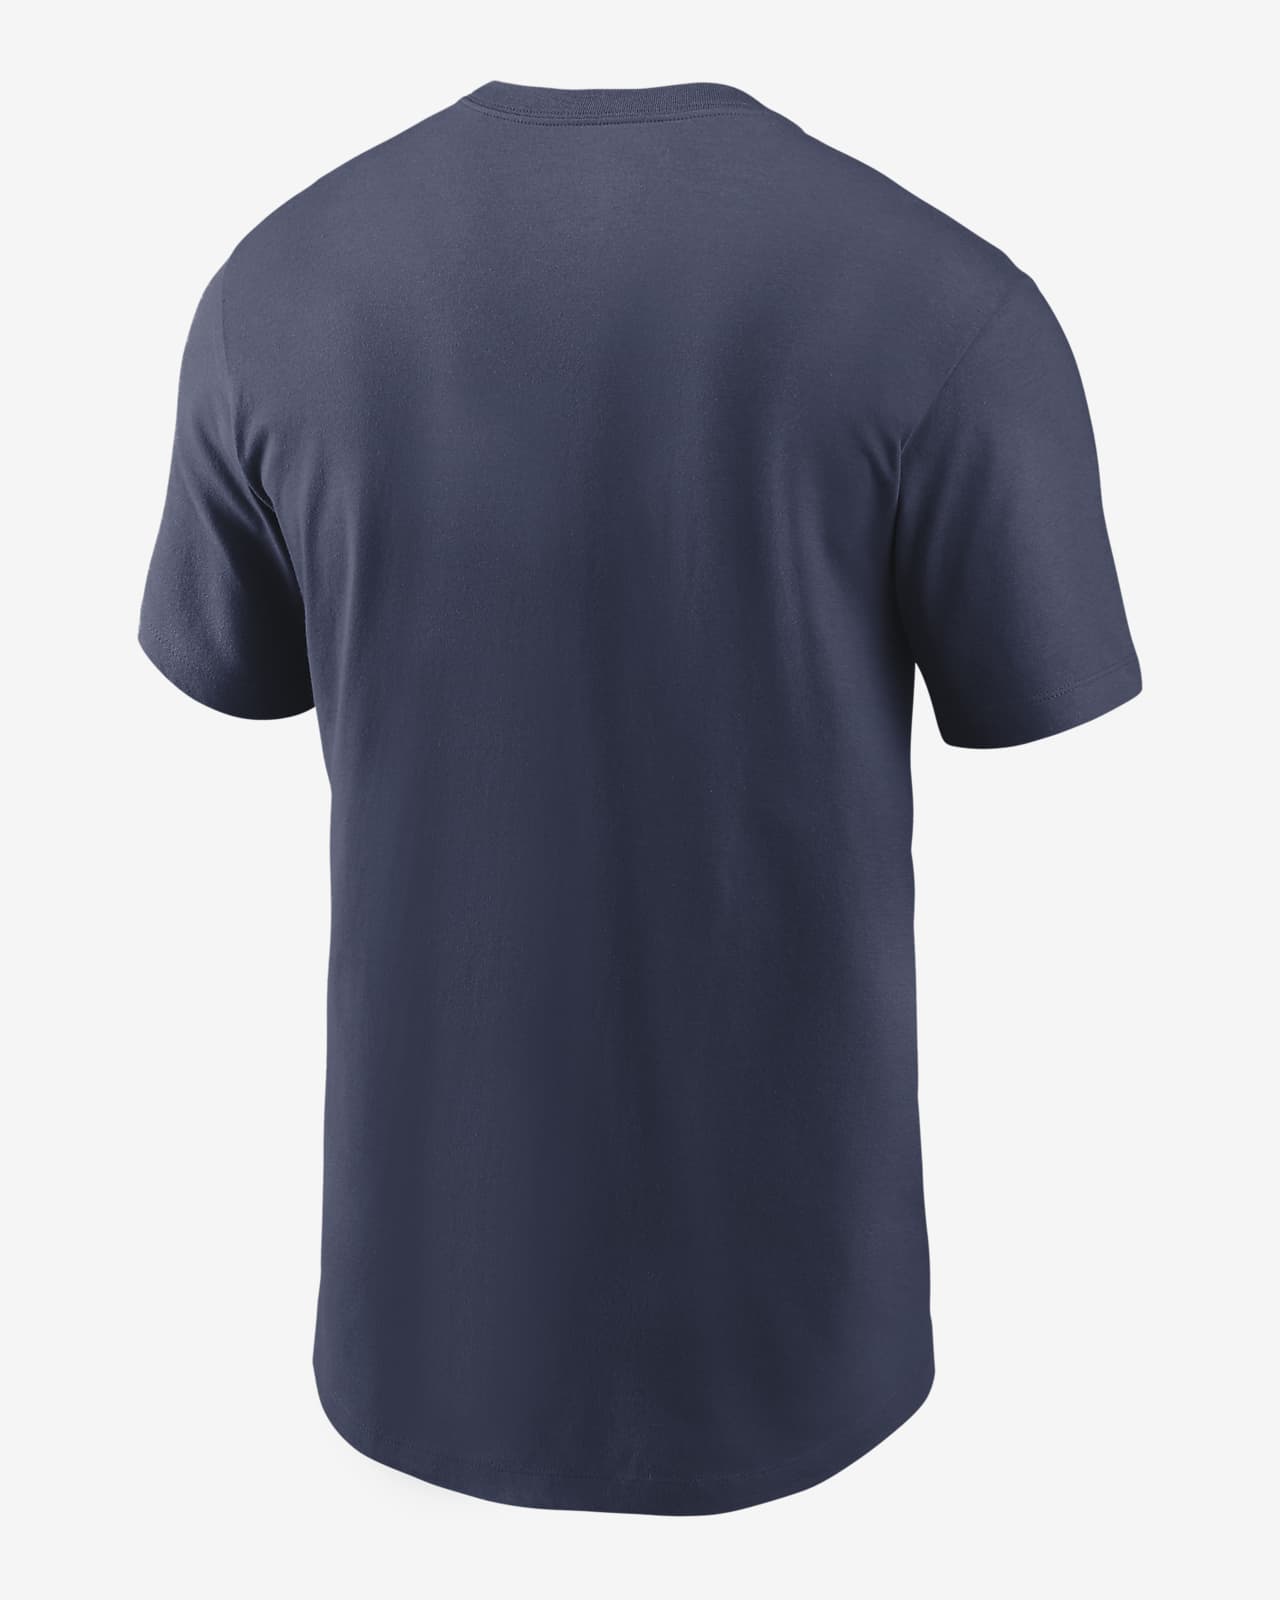 Boston Red Sox Campus Lifestyle Genuine Major League Merchandise T Shirt XS  NWT